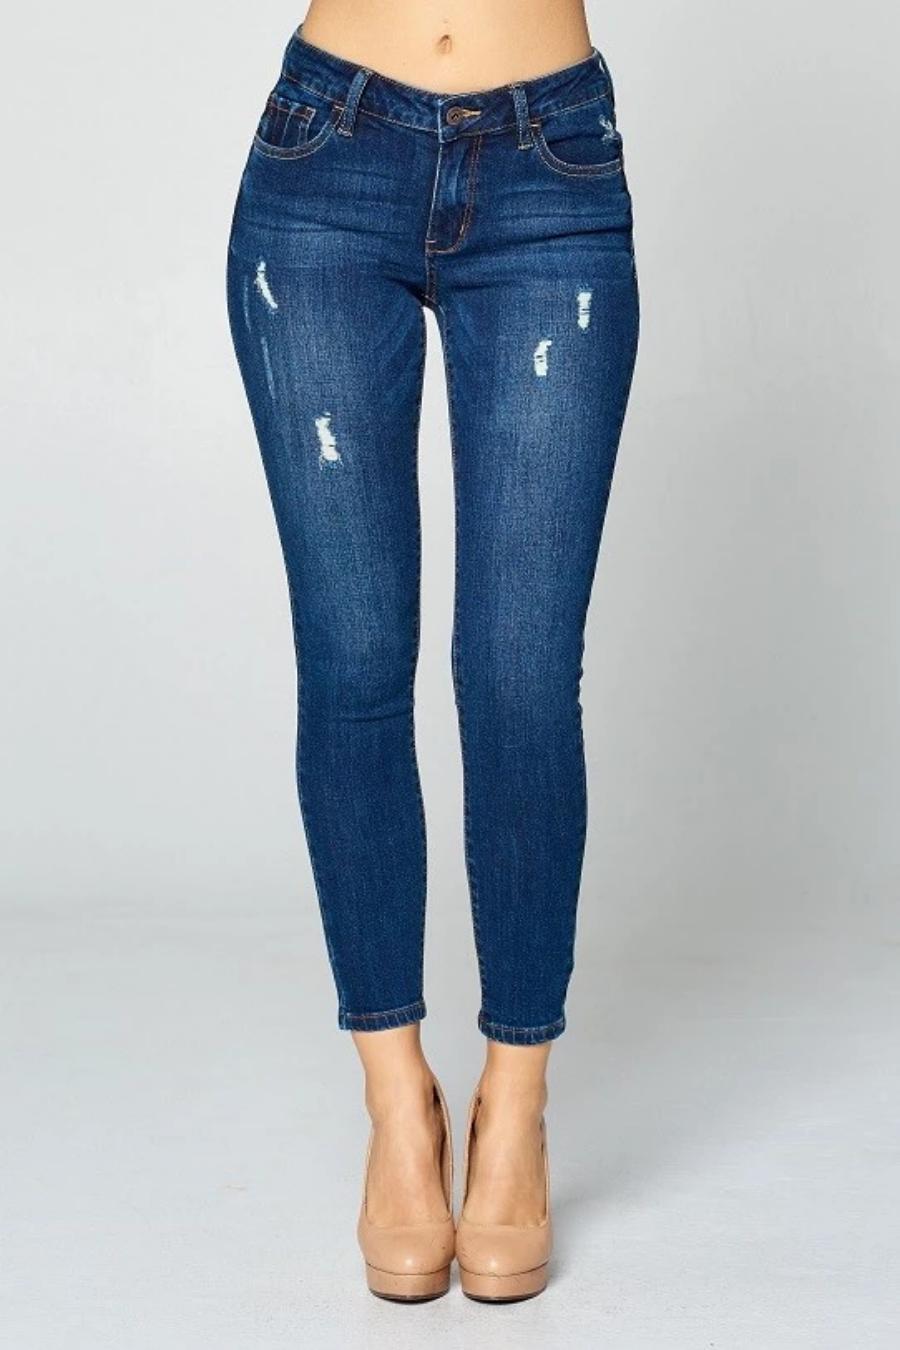 Jace Dark Distressed Skinny Jeans - Jess Lea Boutique